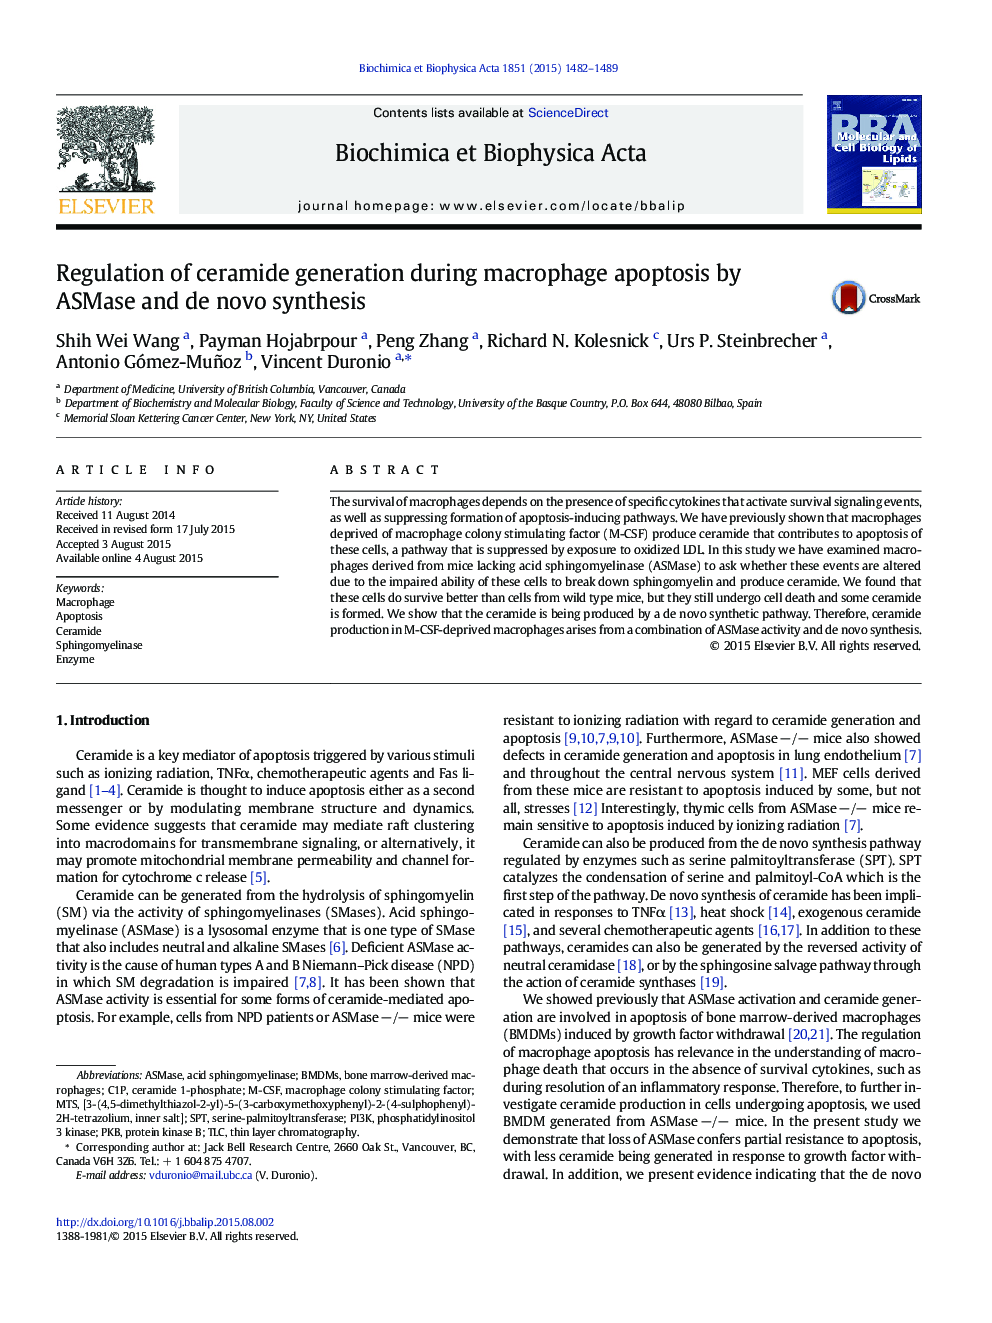 Regulation of ceramide generation during macrophage apoptosis by ASMase and de novo synthesis